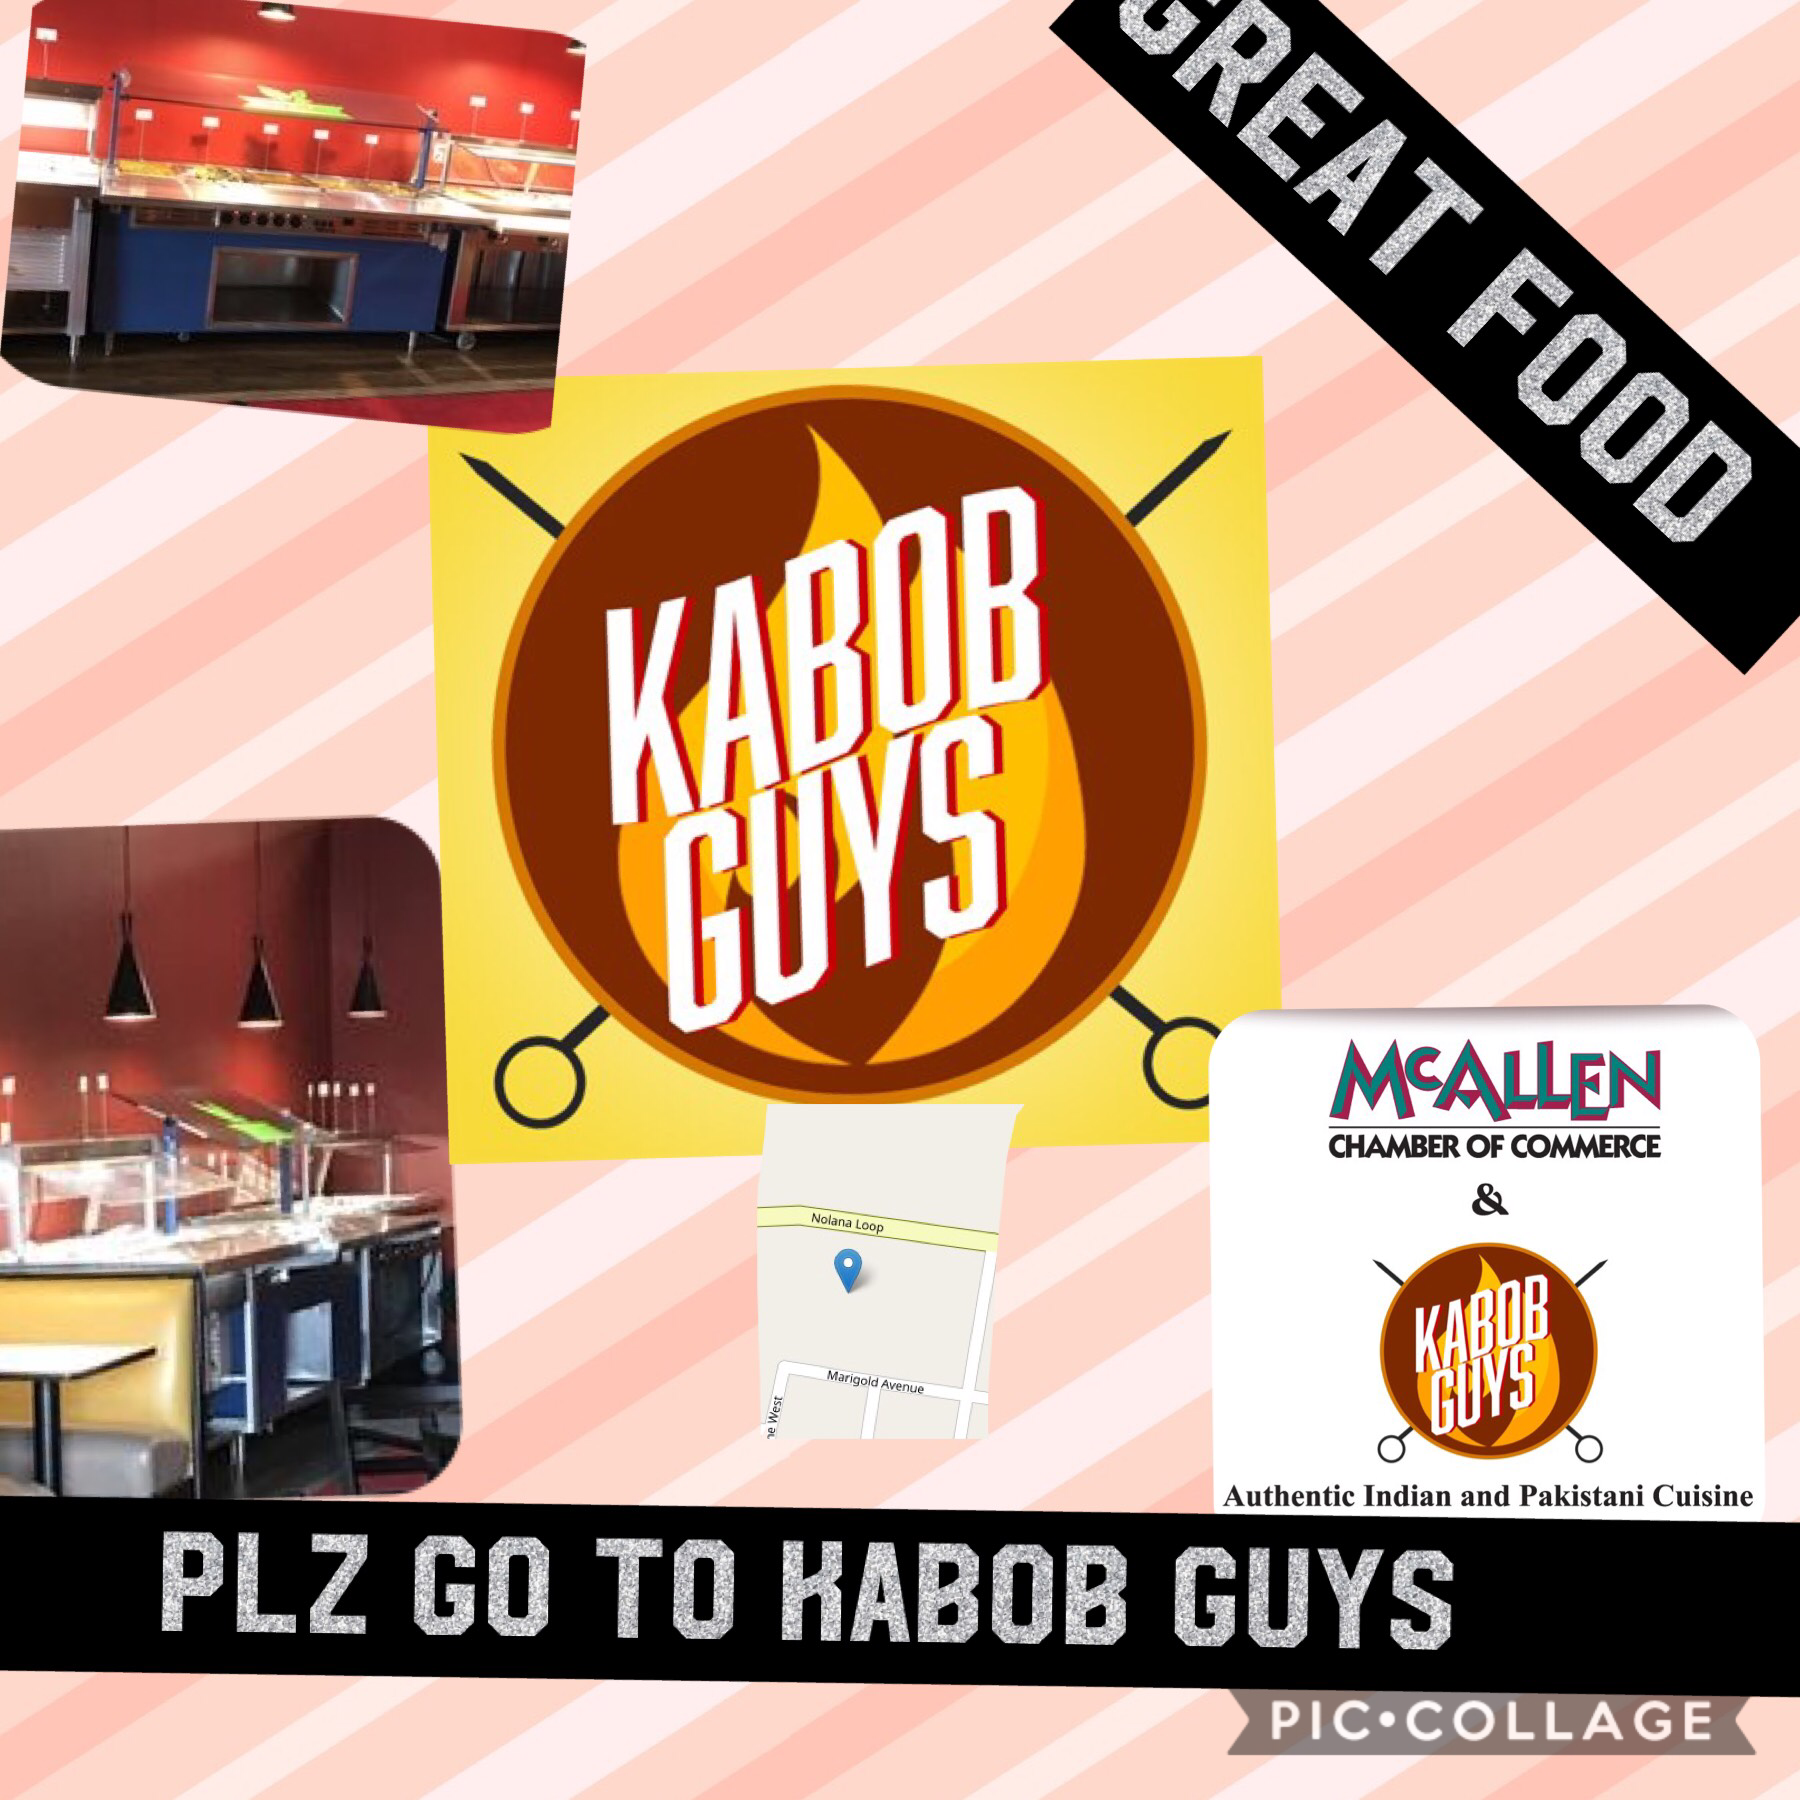 Kabob guys great restaurant!!!!